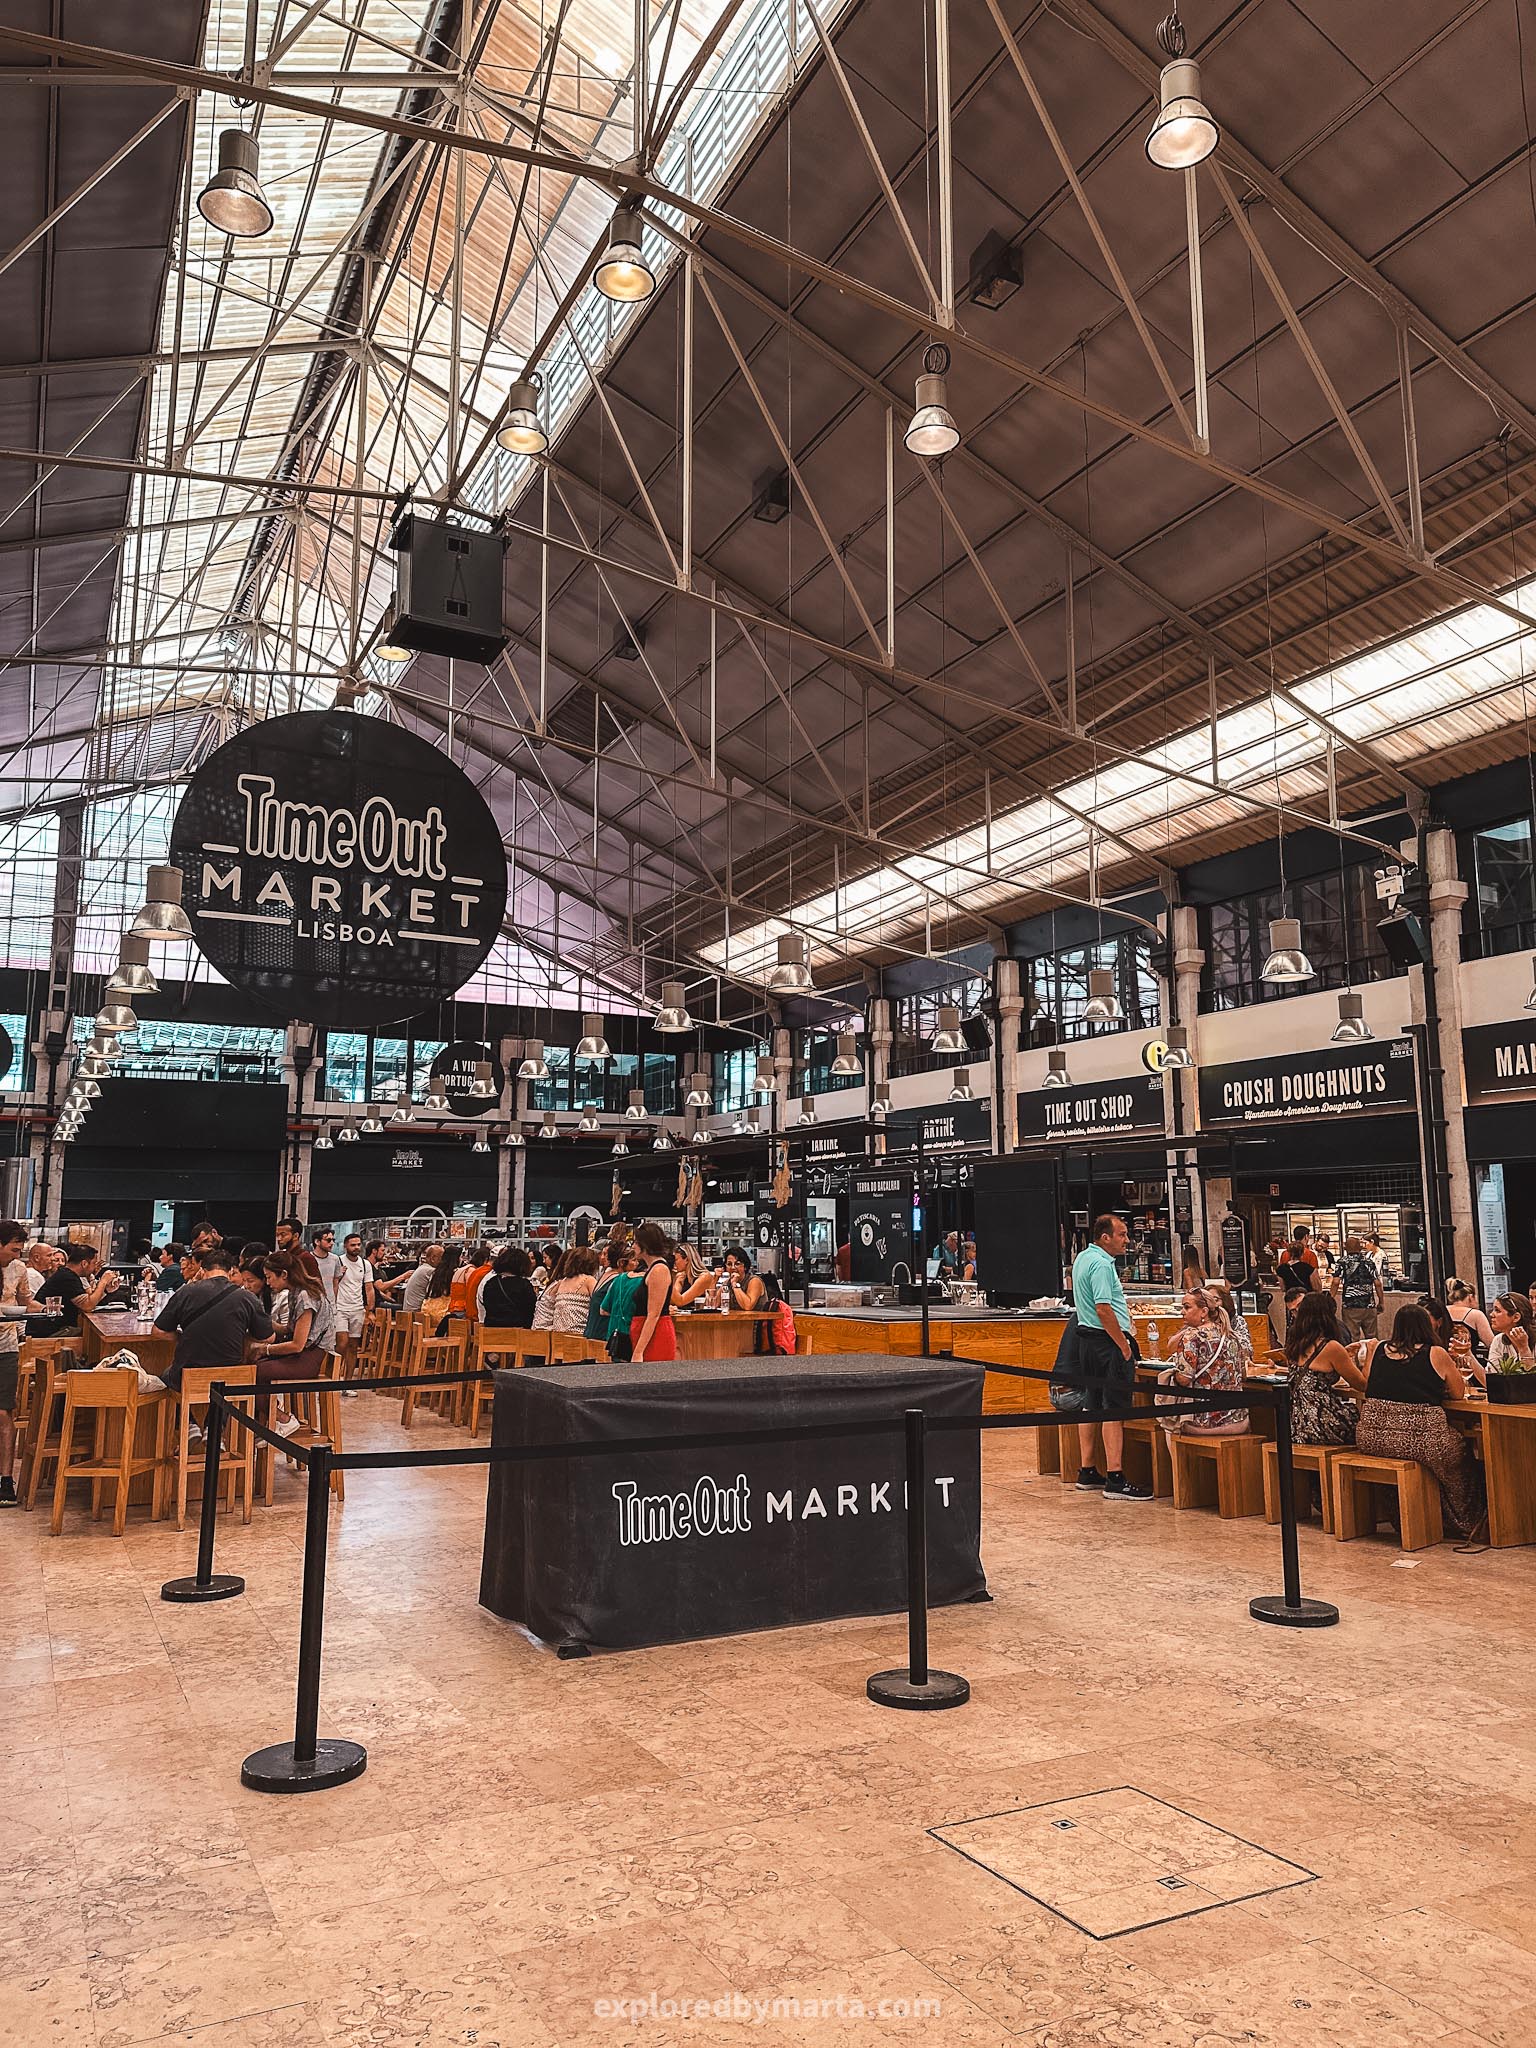 Time Out Market Lisboa - food court style indoor market in Lisbon, Portugal